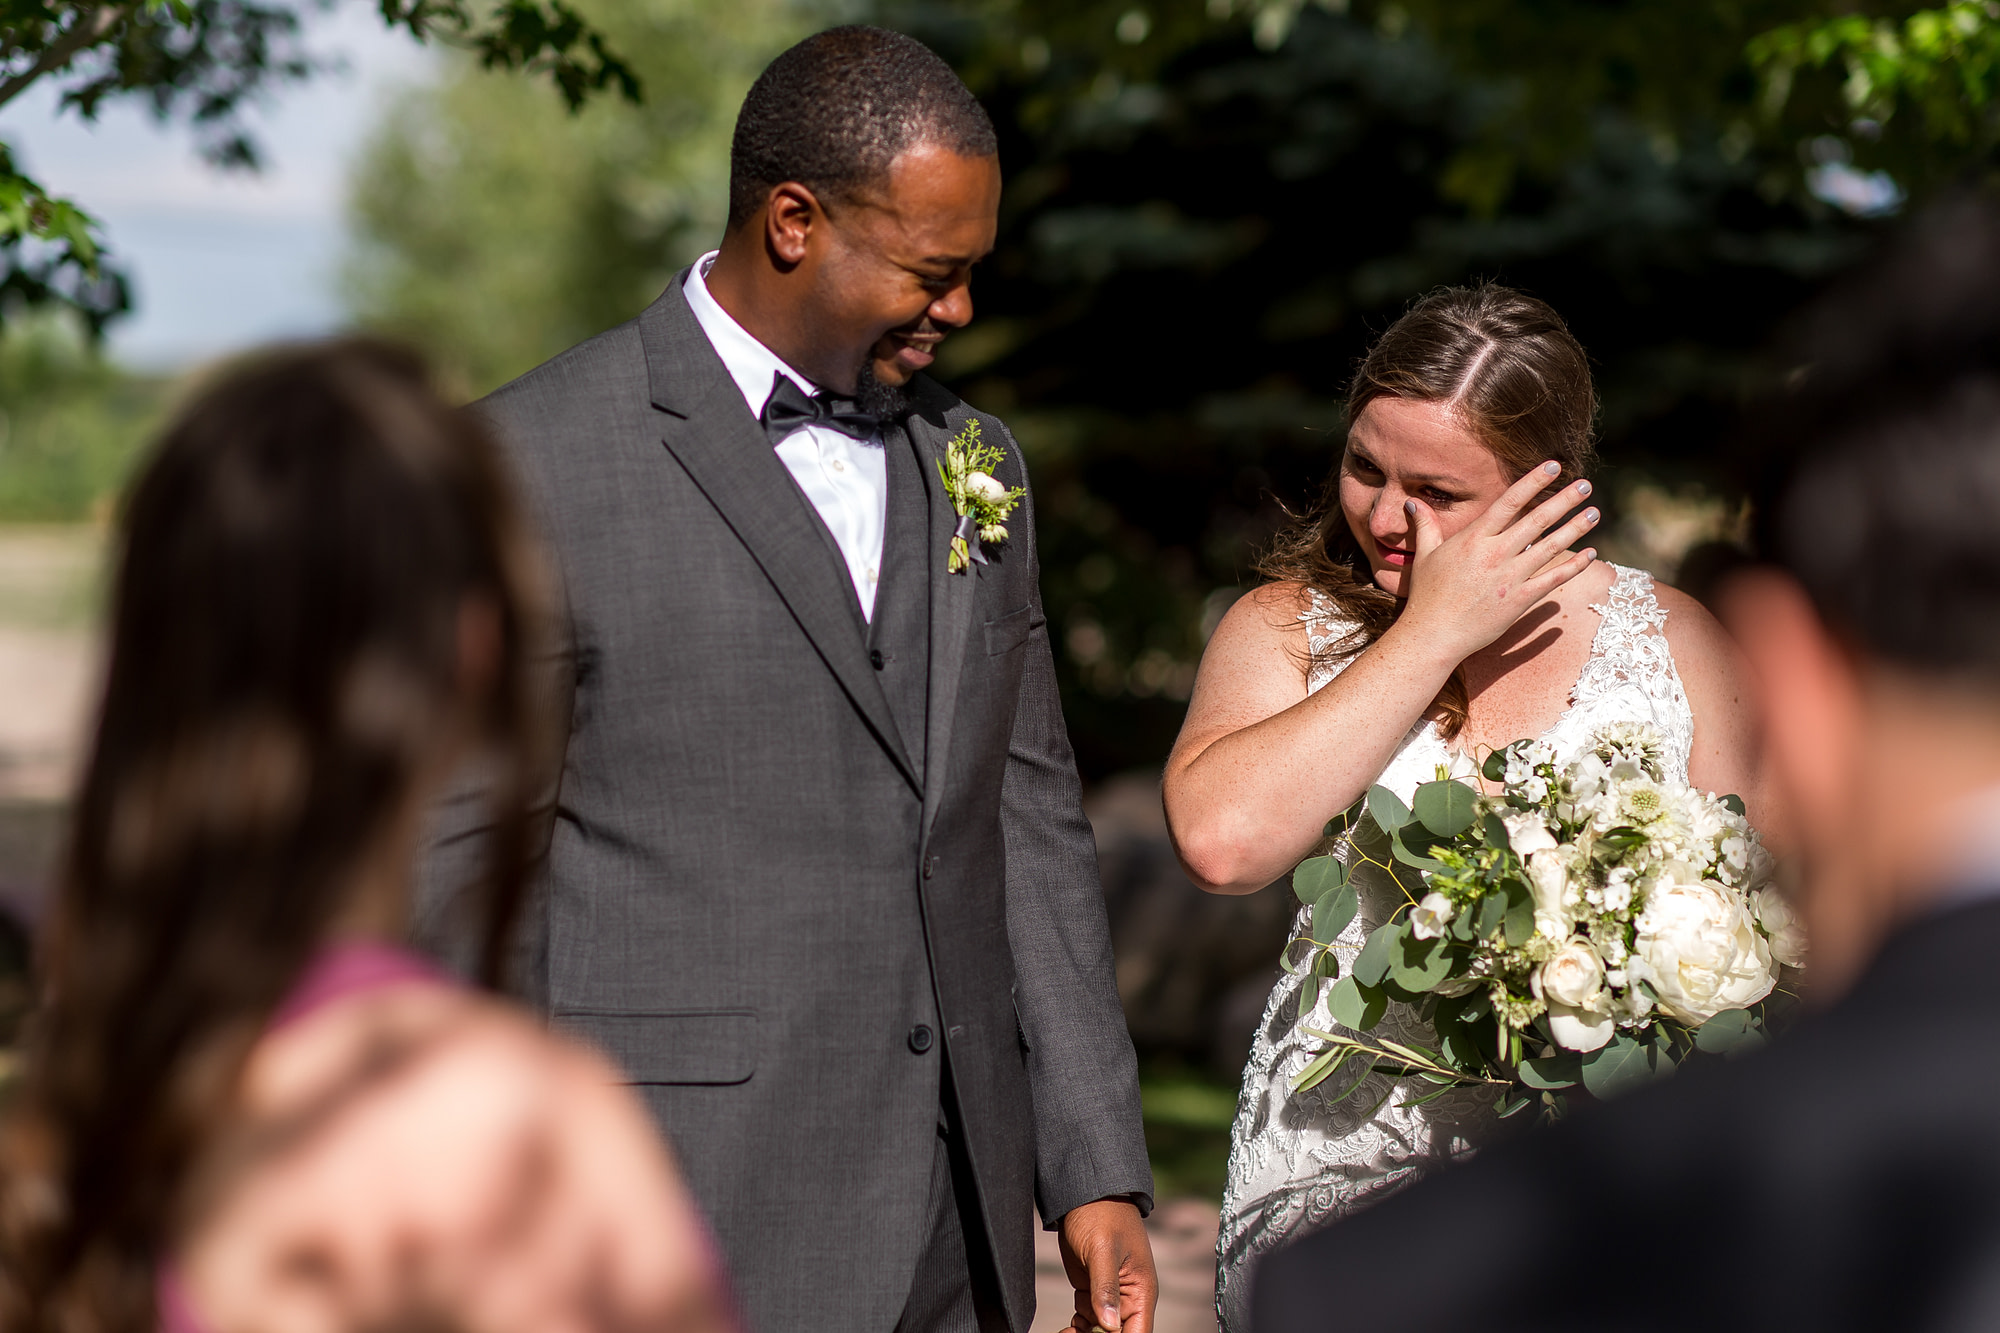 The bride wipes away a tear after a Greenbriar Inn wedding in Boulder, Colorado.